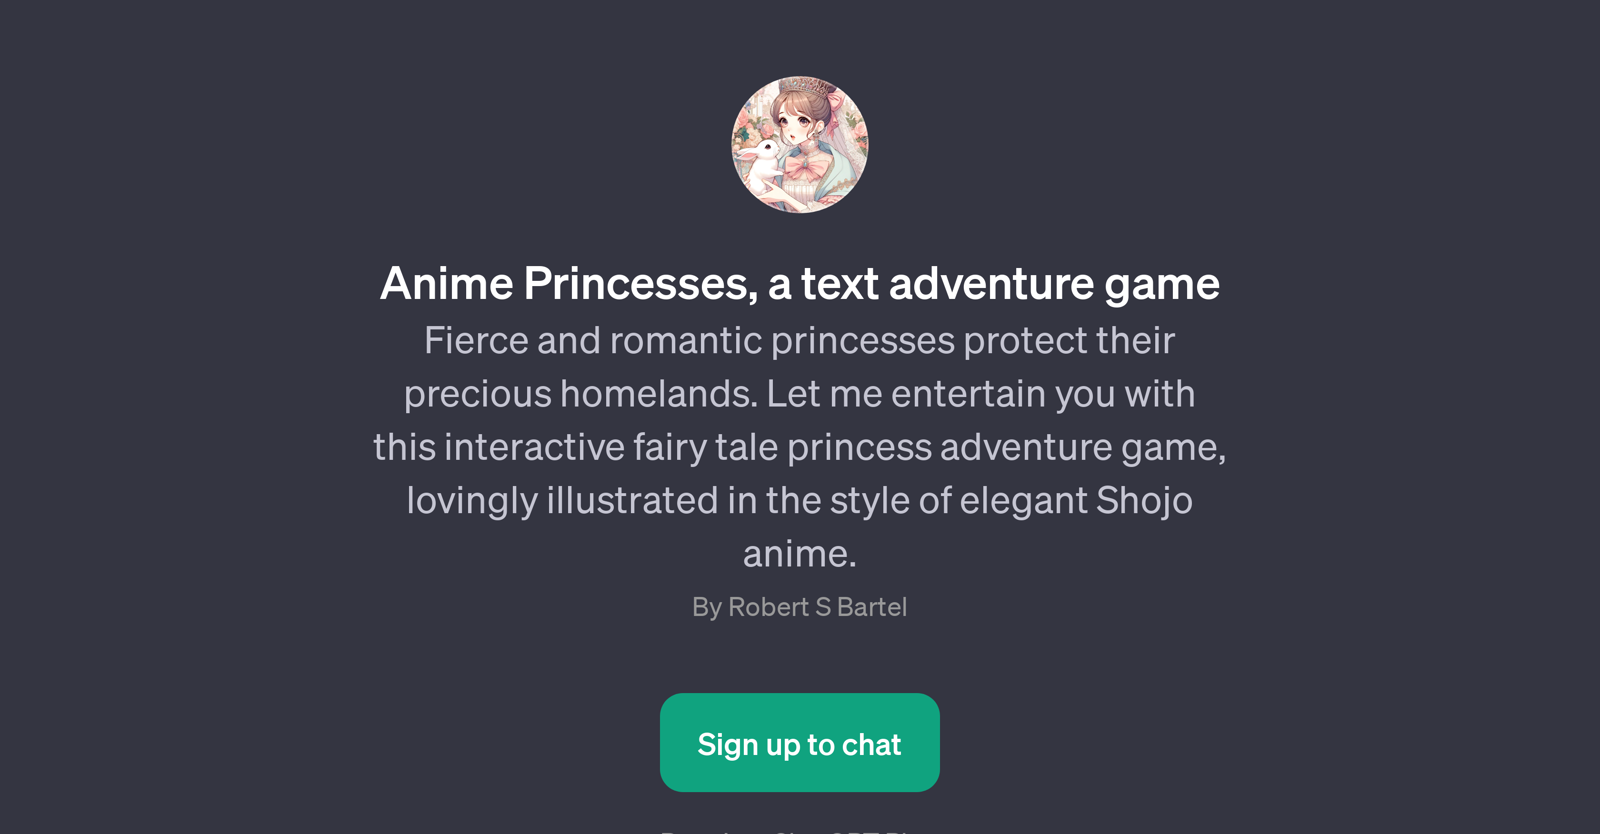 Anime Princesses, a text adventure game website